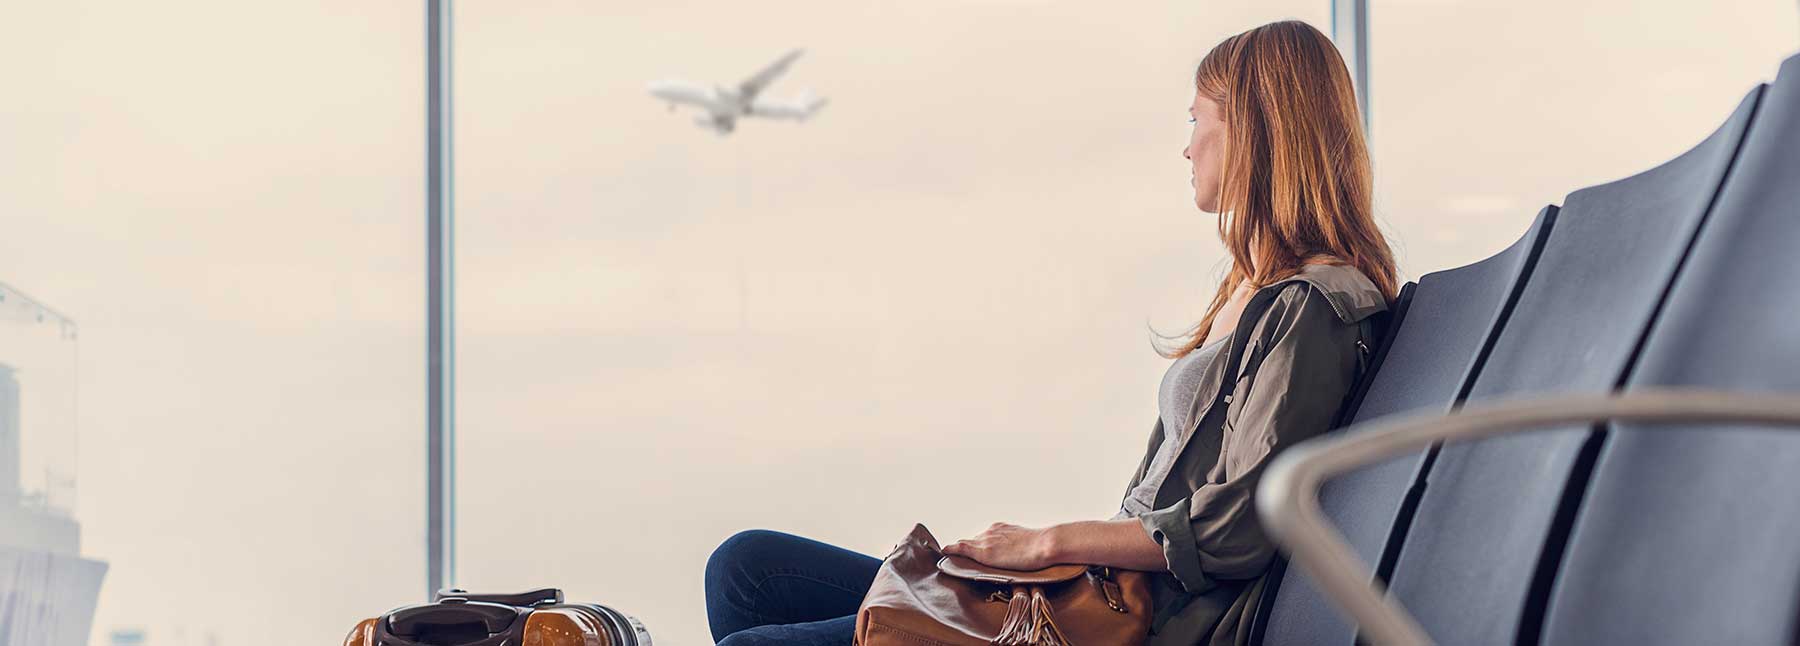 Woman seating at an airport 